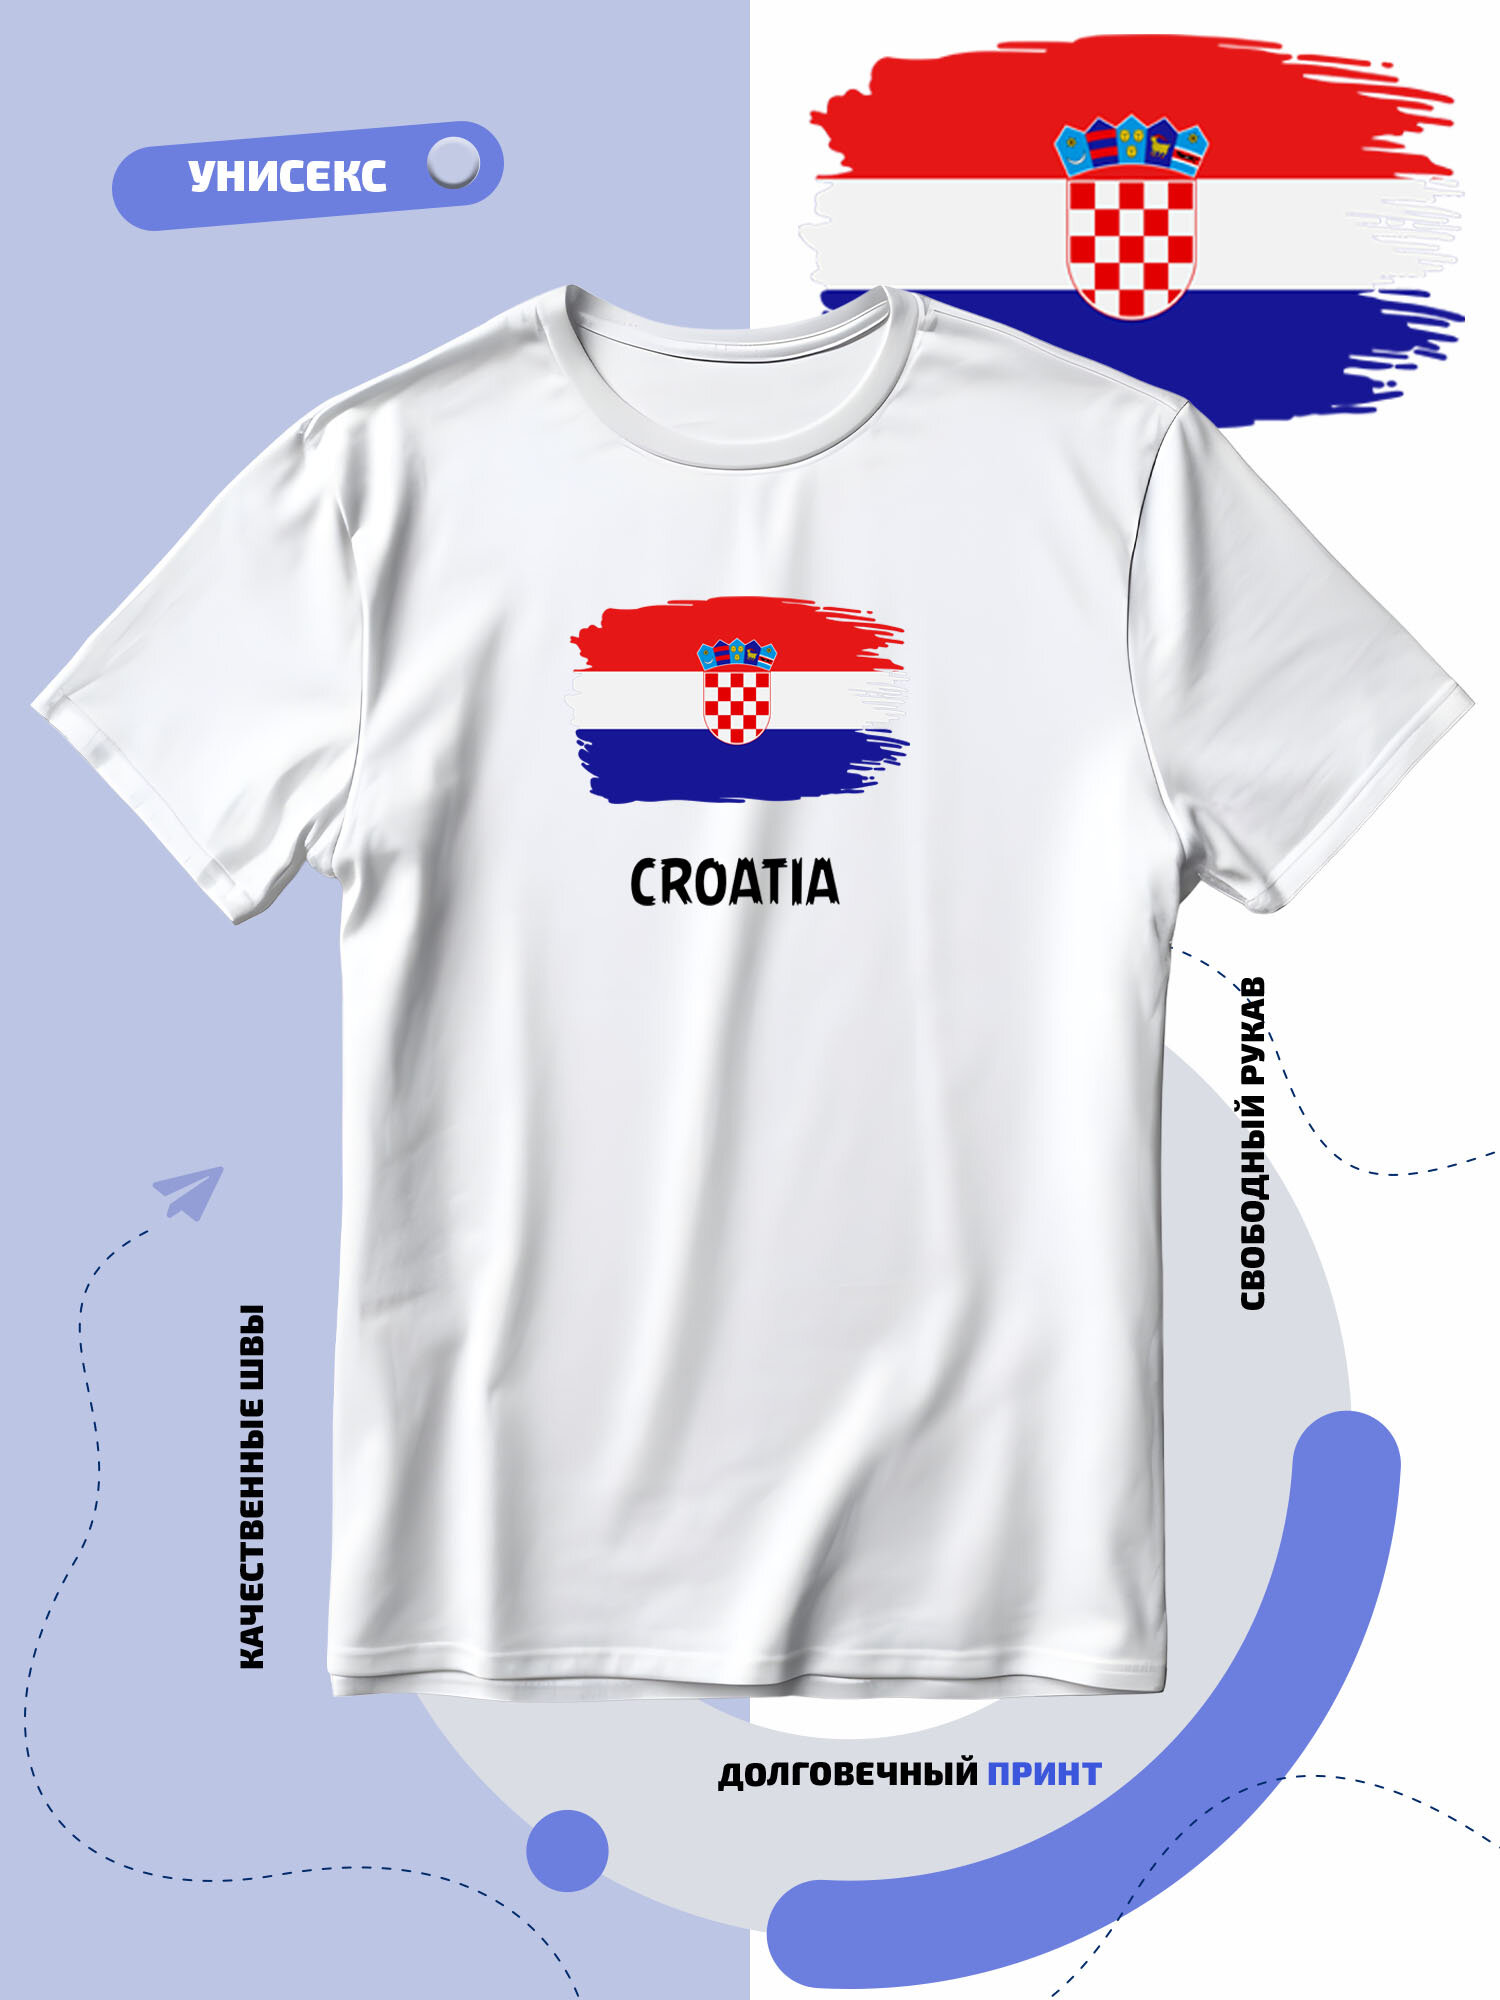 Футболка SMAIL-P с флагом Хорватии-Croatia